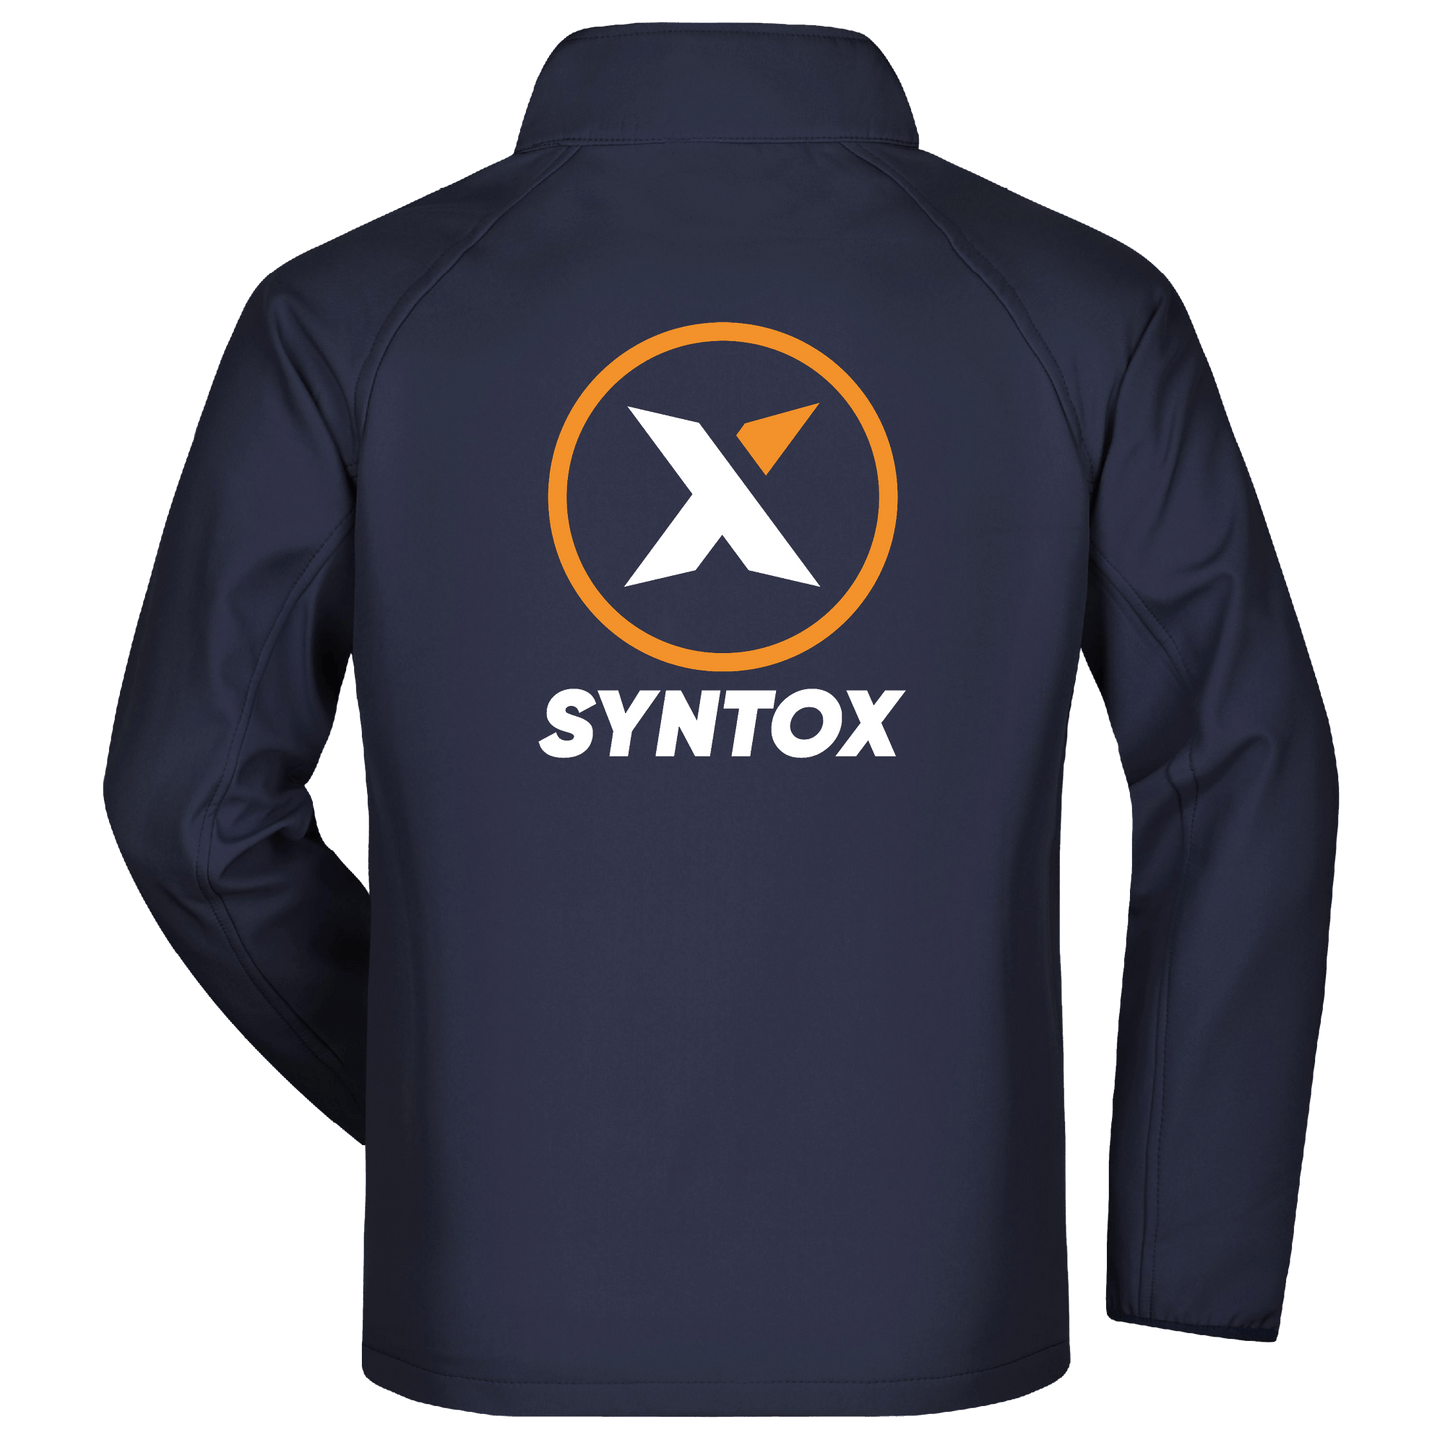 Jakke - Voksen - Syntox